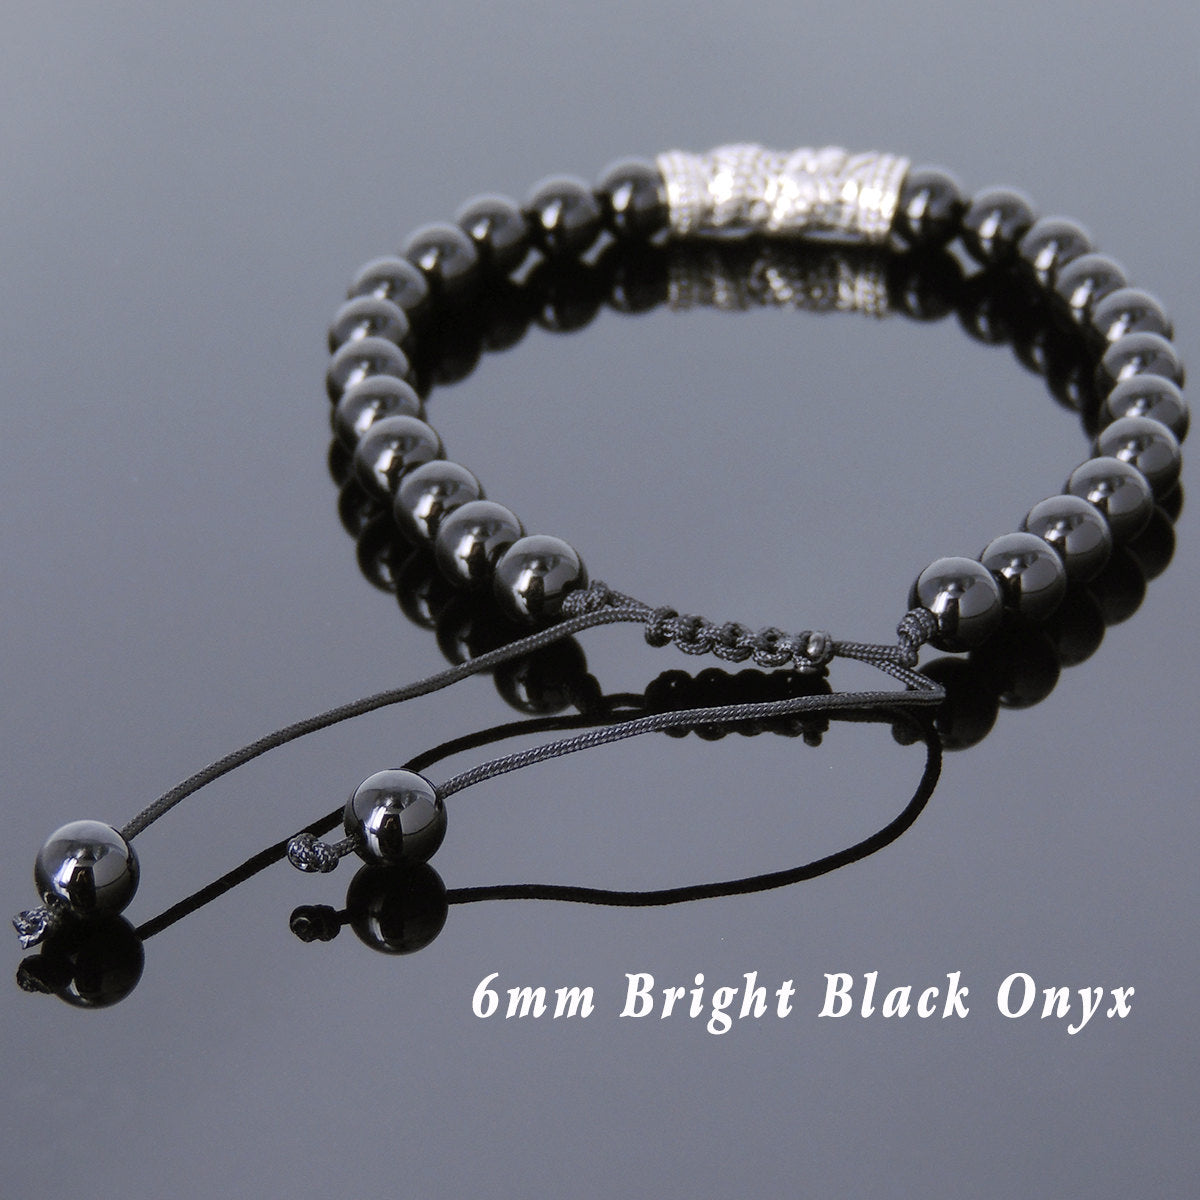 6mm Bright Black Onyx Adjustable Braided Gemstone Bracelet with S925 Sterling Silver Dragon Charm - Handmade by Gem & Silver BR789